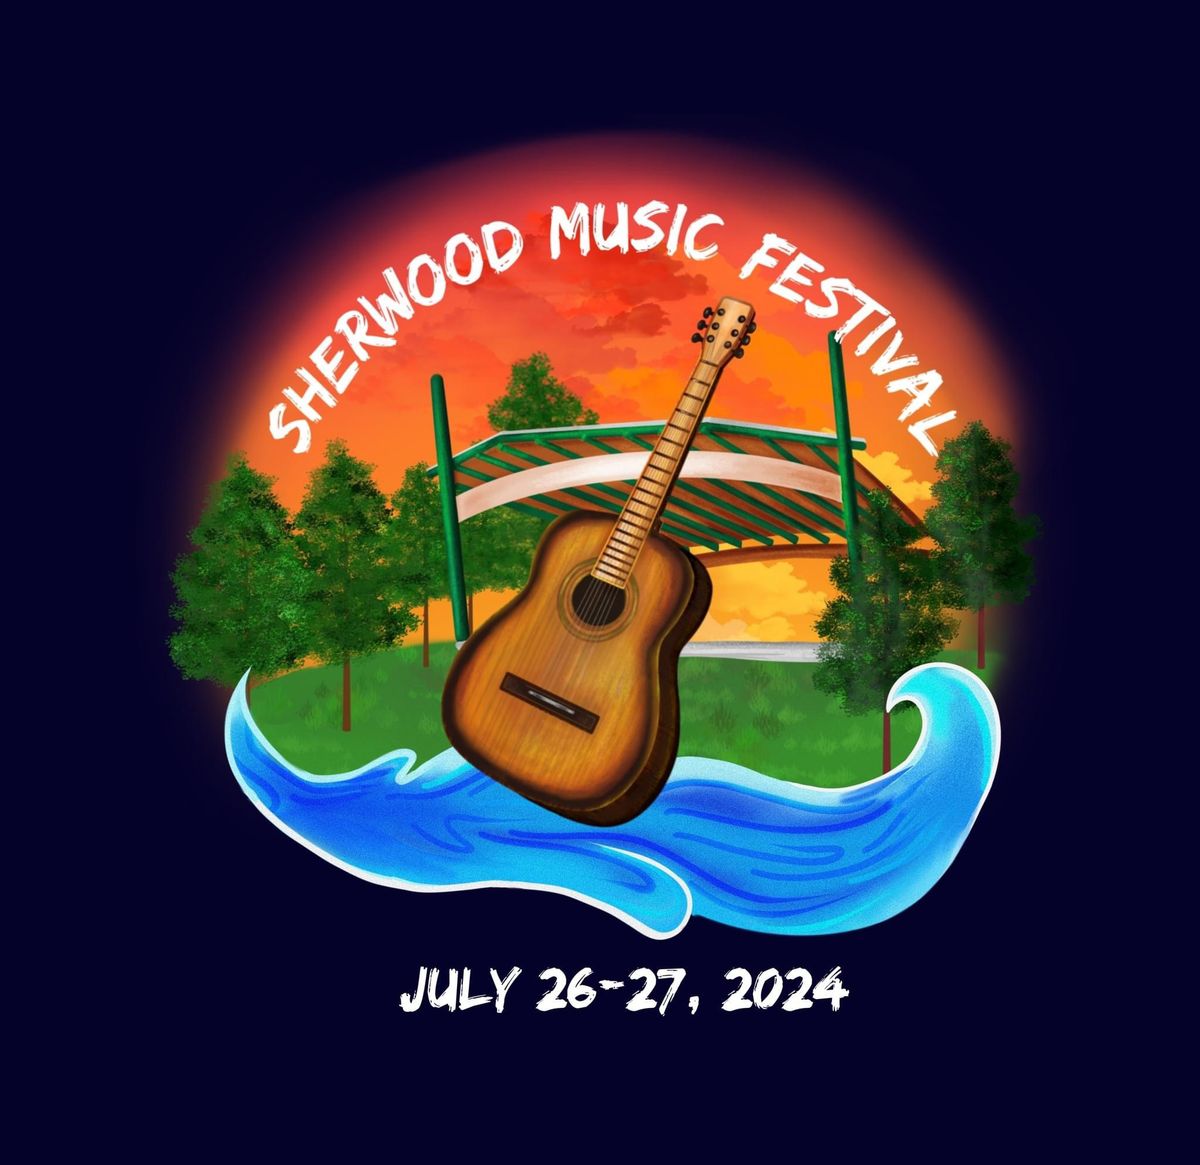 Sherwood Music Festival 